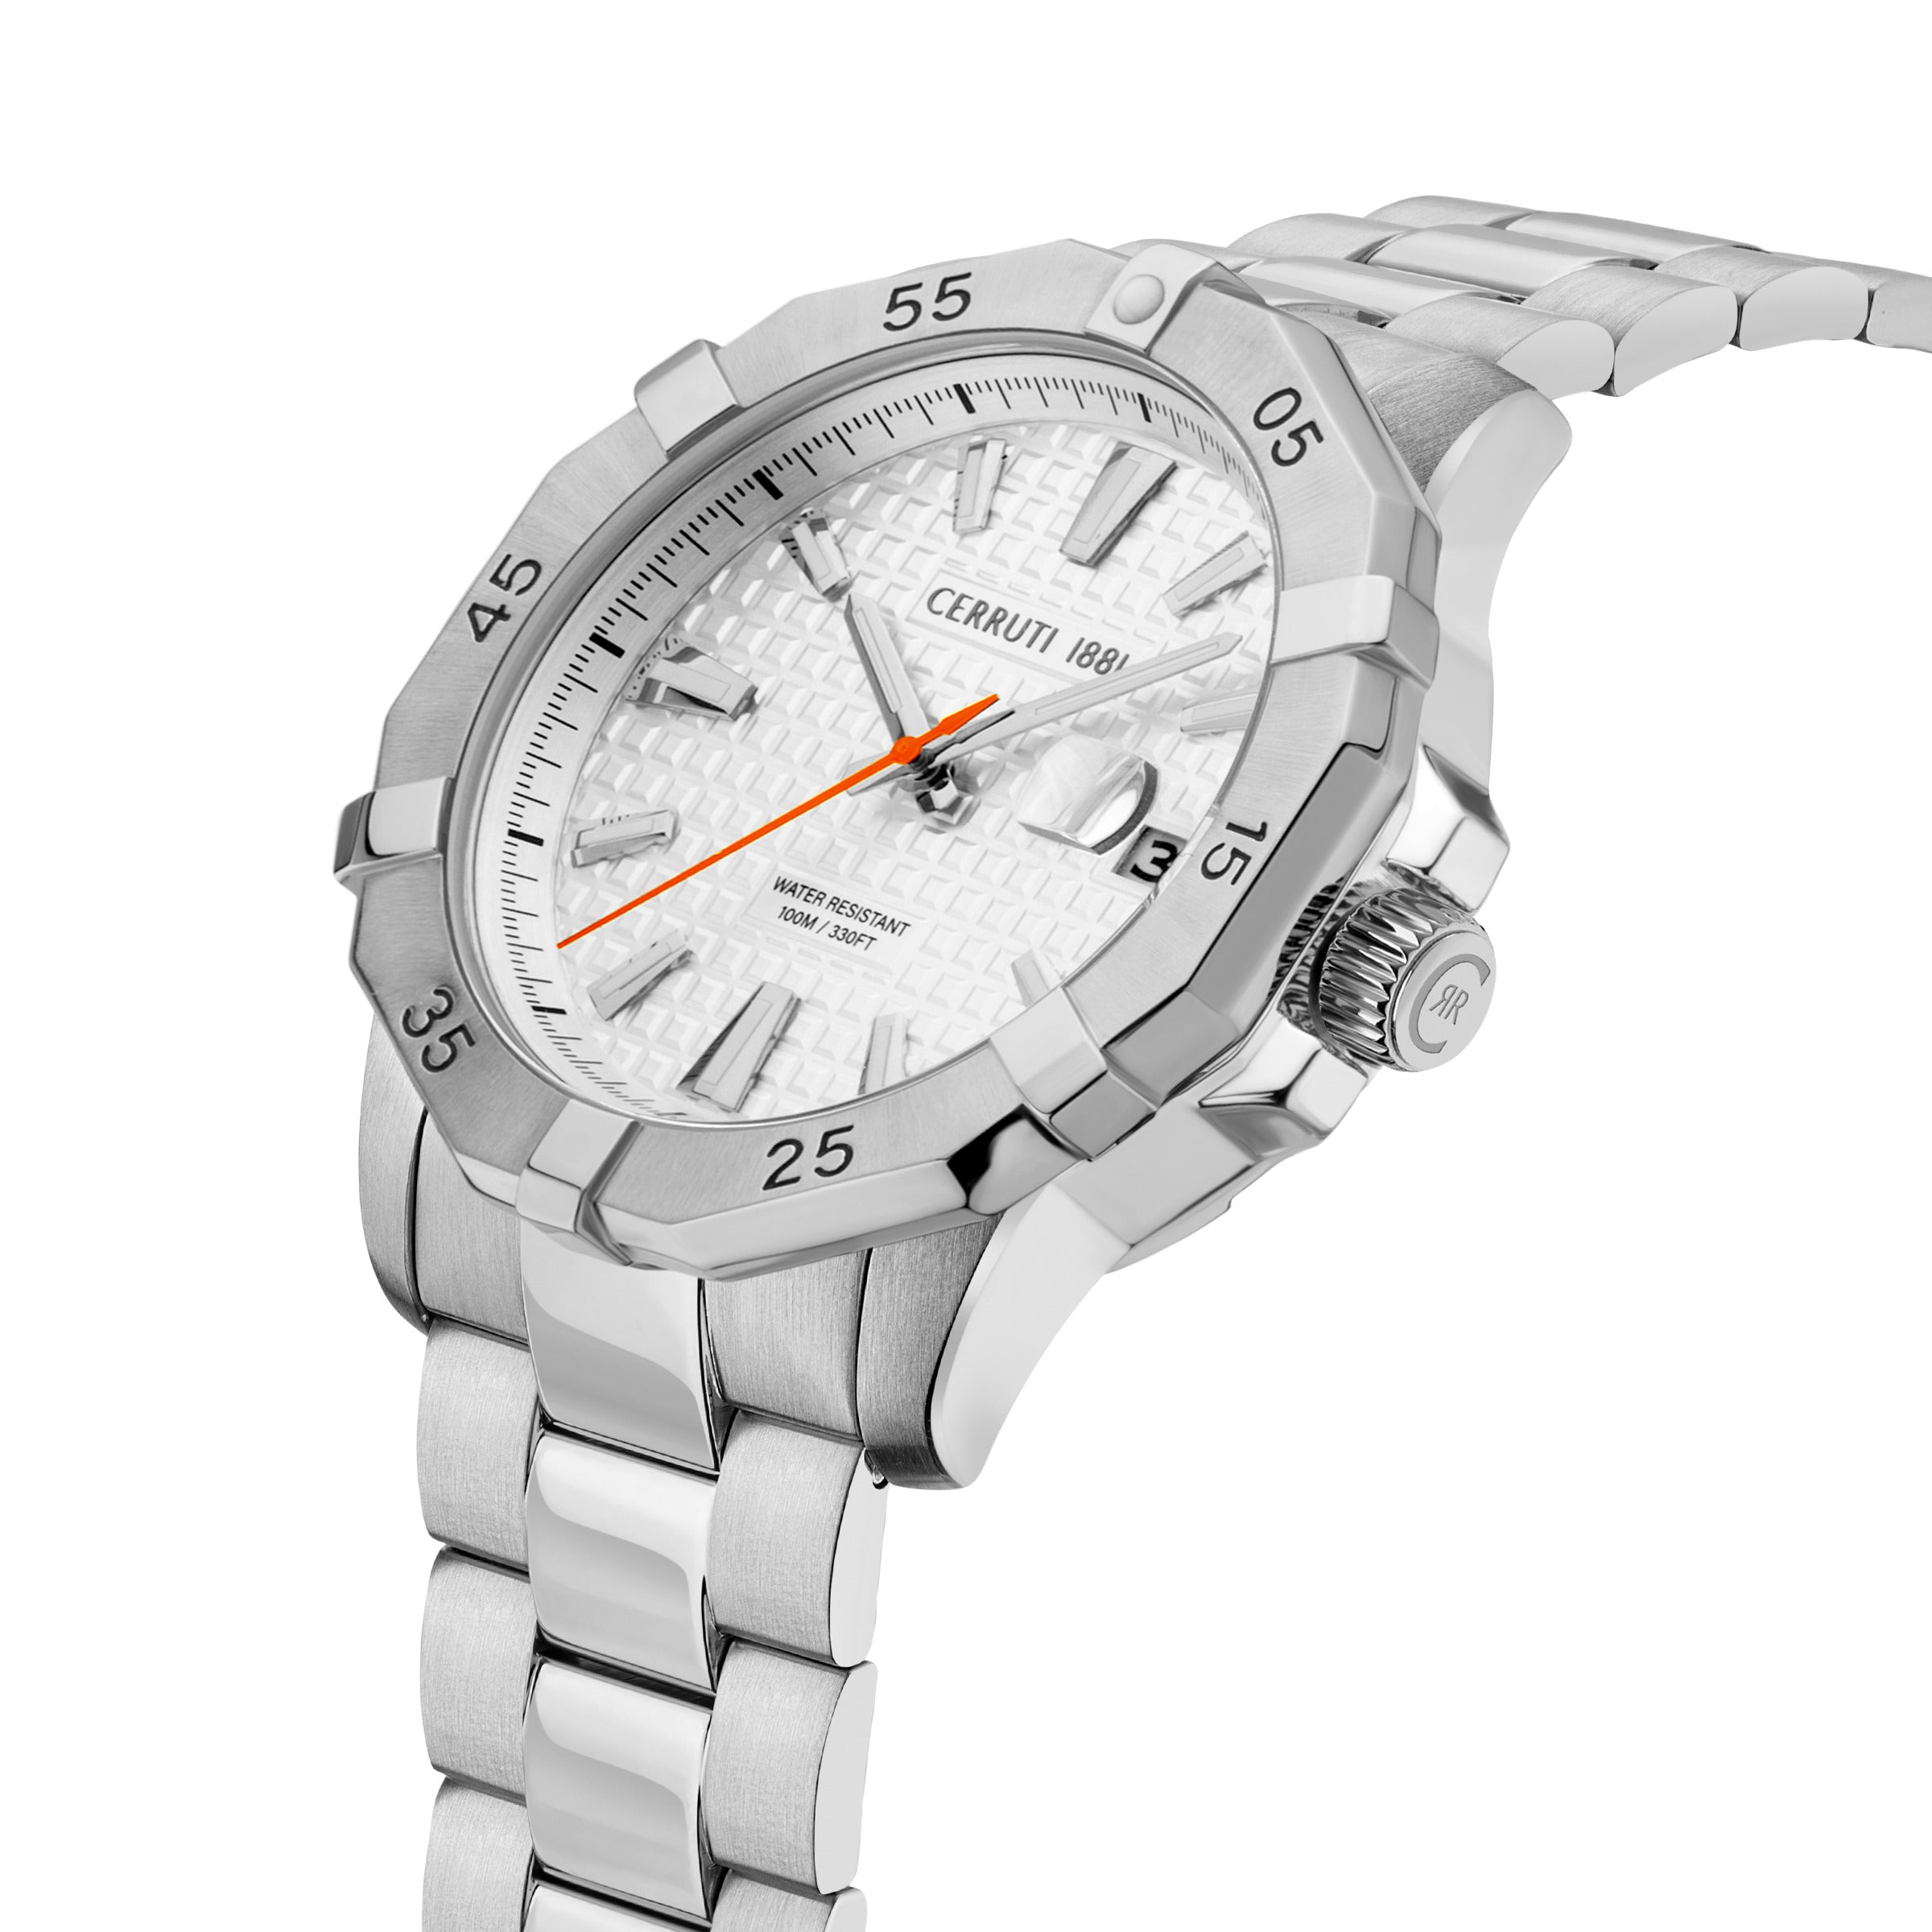 Cerruti Men's Quartz Watch, White Dial - CER-0418